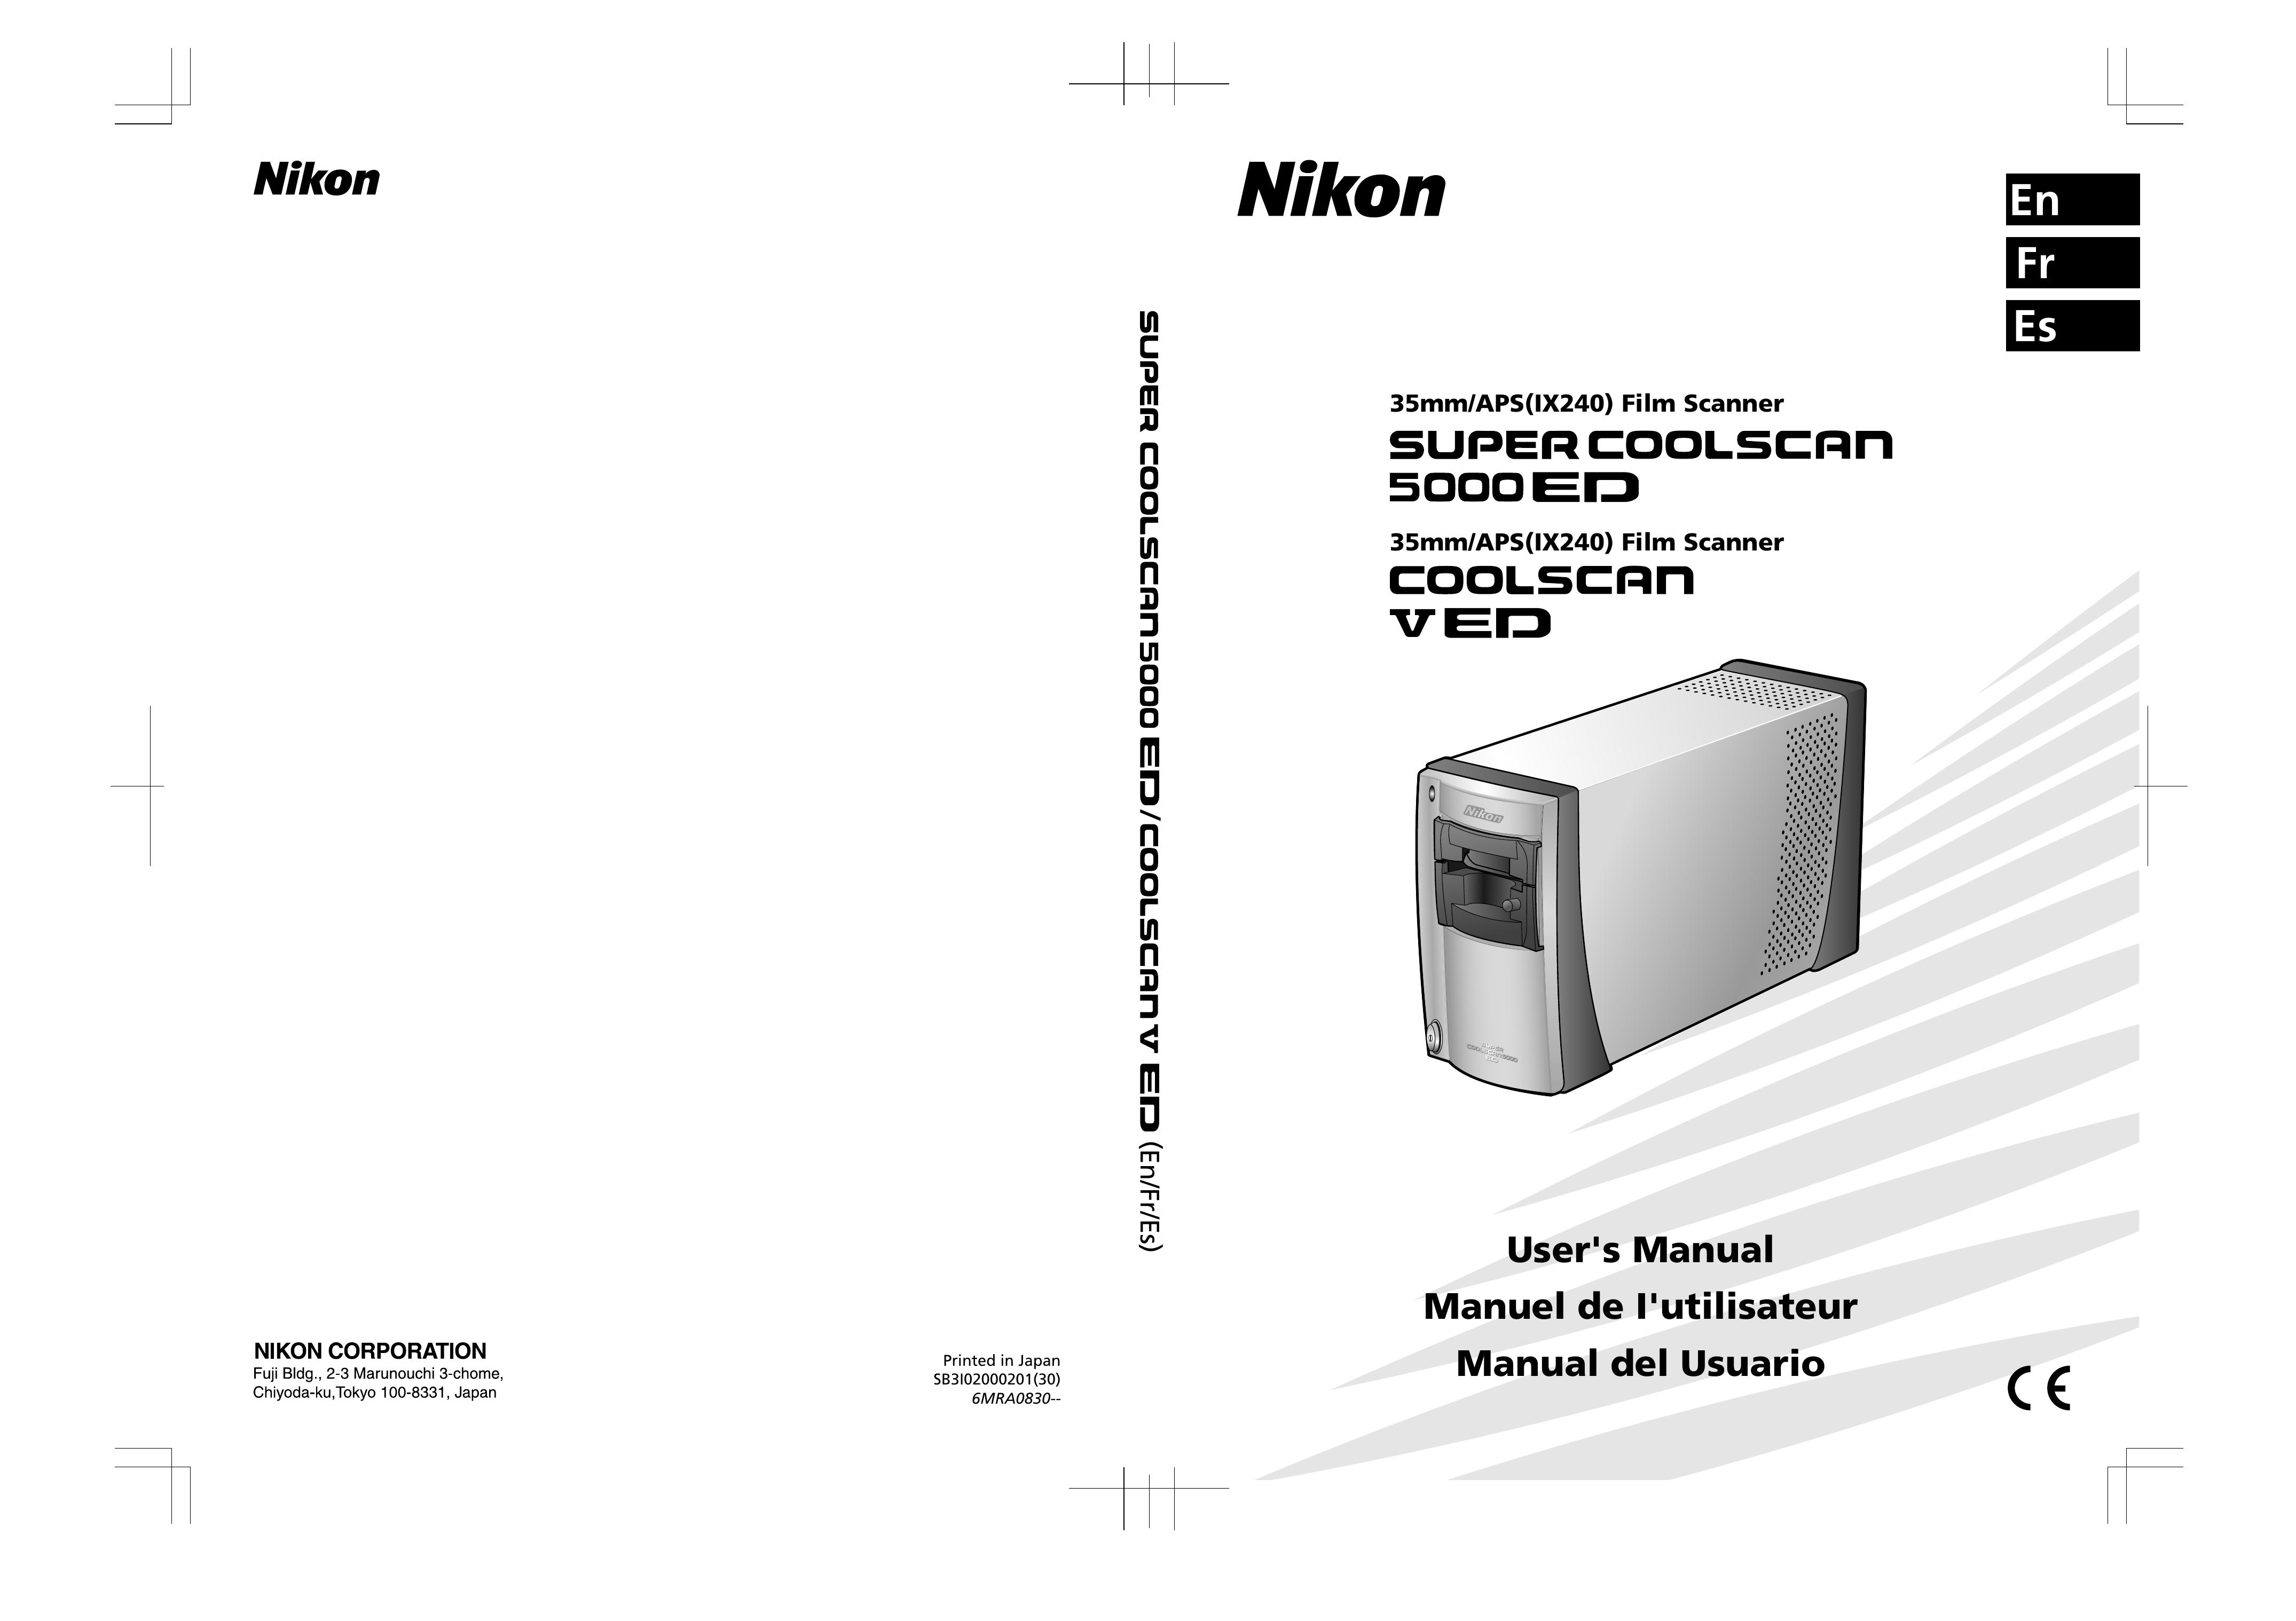 Nikon 5000ED Photo Scanner User Manual